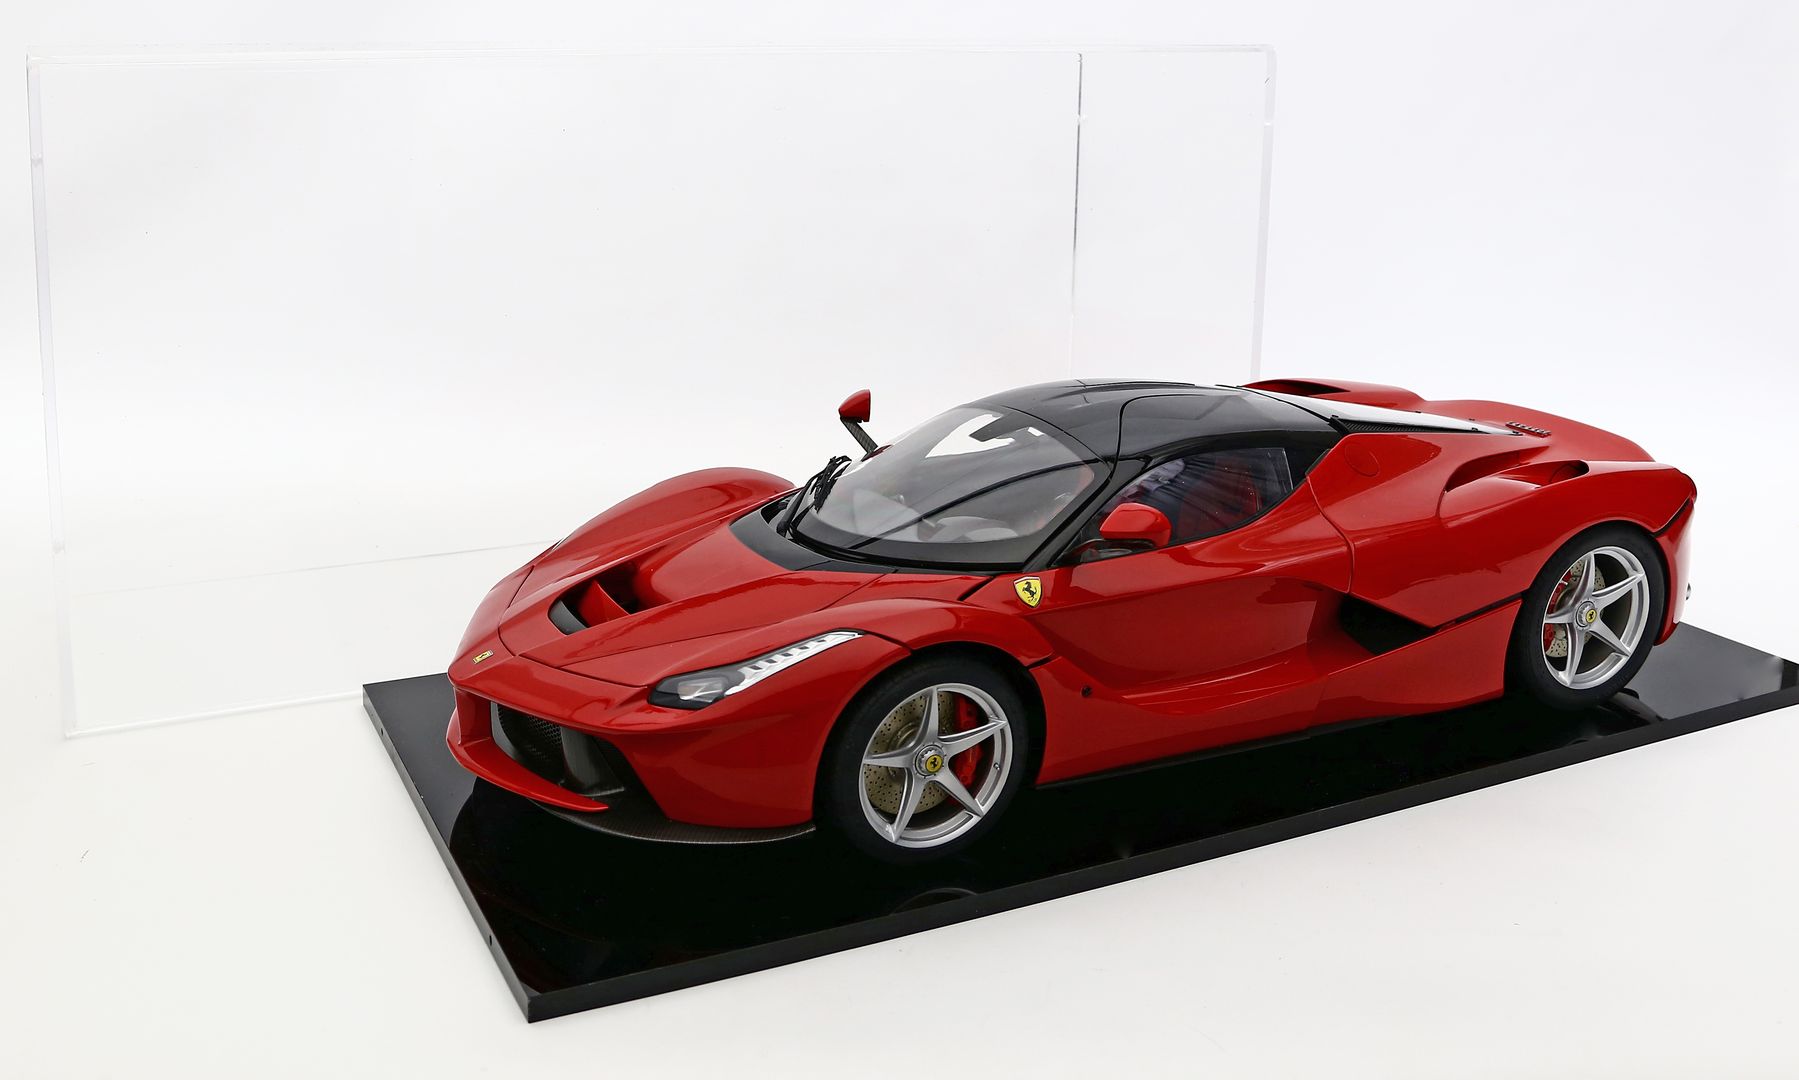 Modellauto "Ferrari", 1:8.